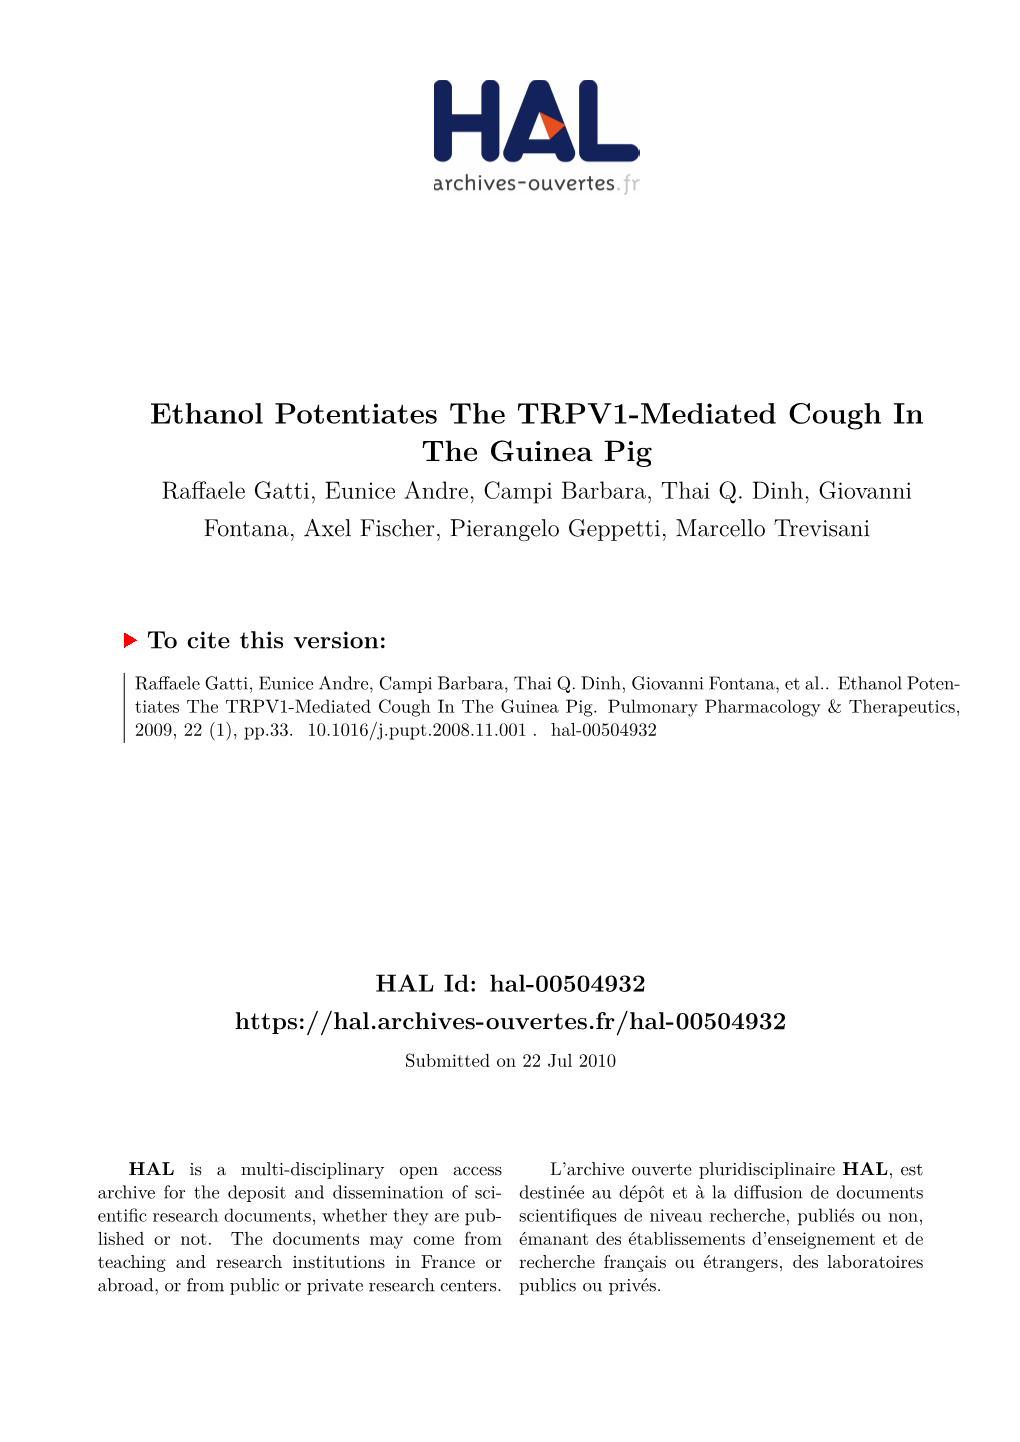 Ethanol Potentiates the TRPV1-Mediated Cough in the Guinea Pig Raffaele Gatti, Eunice Andre, Campi Barbara, Thai Q